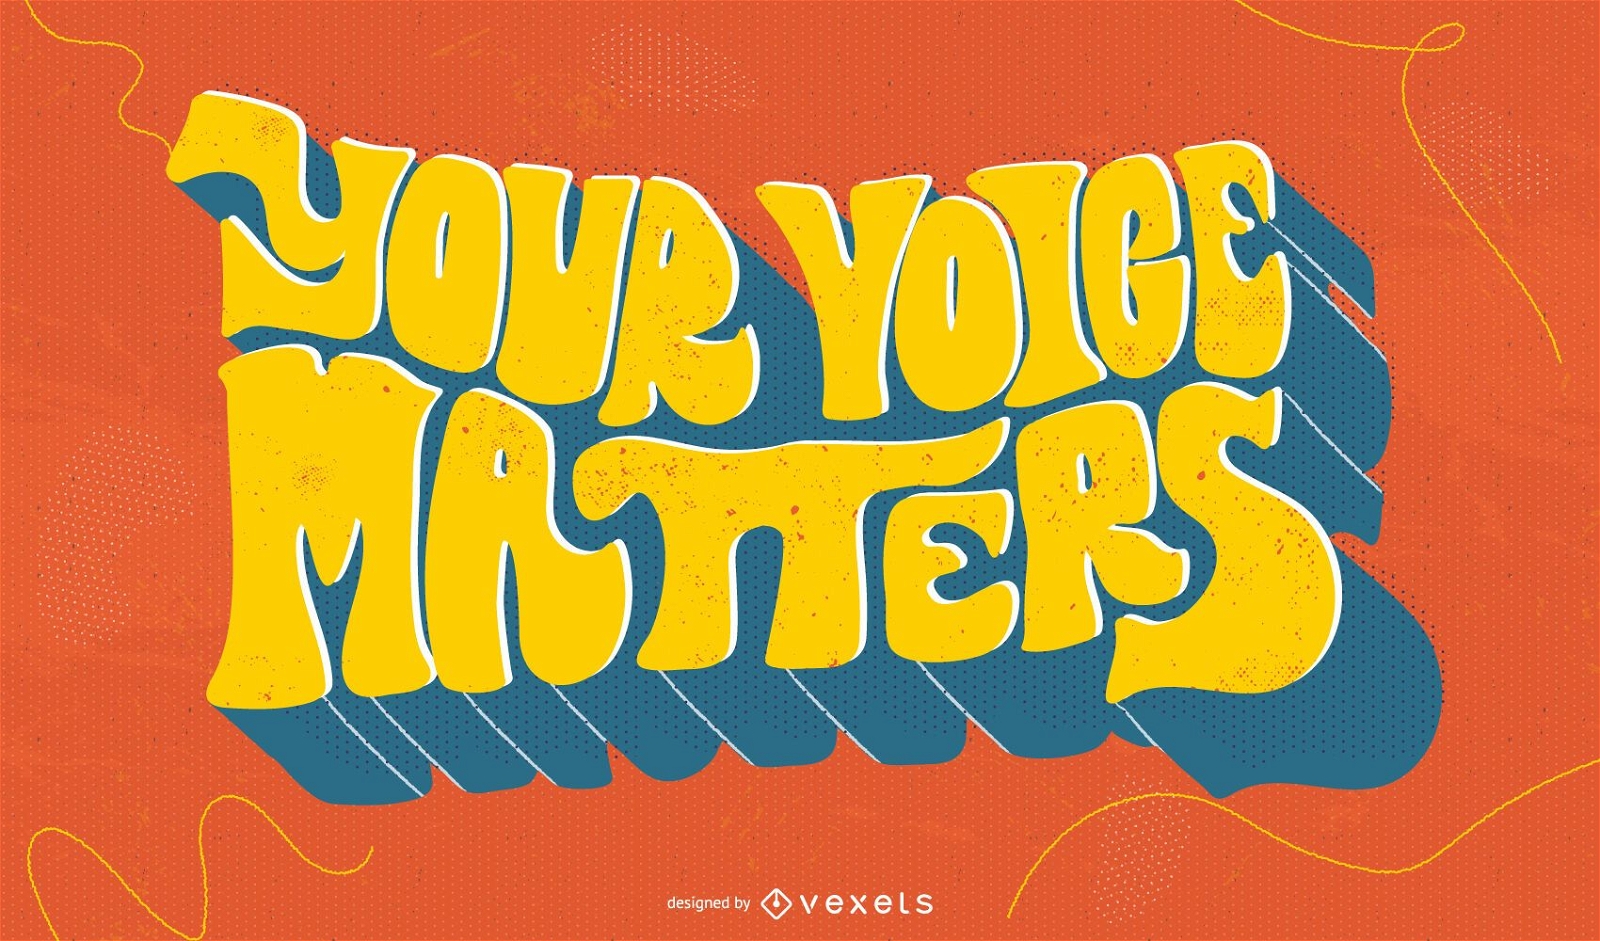 Your voice matters blm lettering